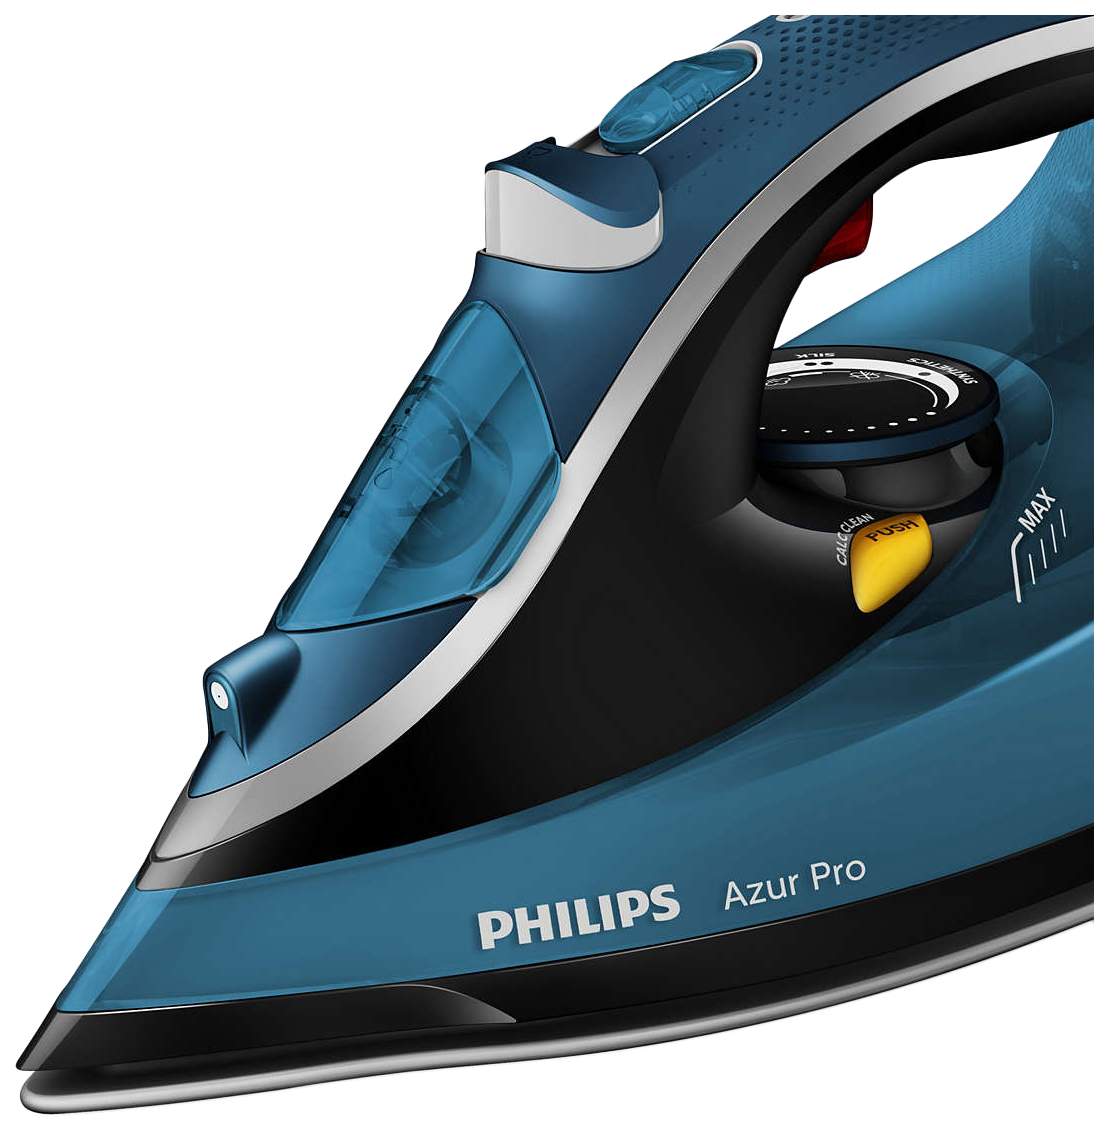 Филипс азур купить. Утюг Philips gc4881. Philips Azur утюг 2800w. Philips Azur Pro 2800w. Philips gc4881/20 Azur Pro.